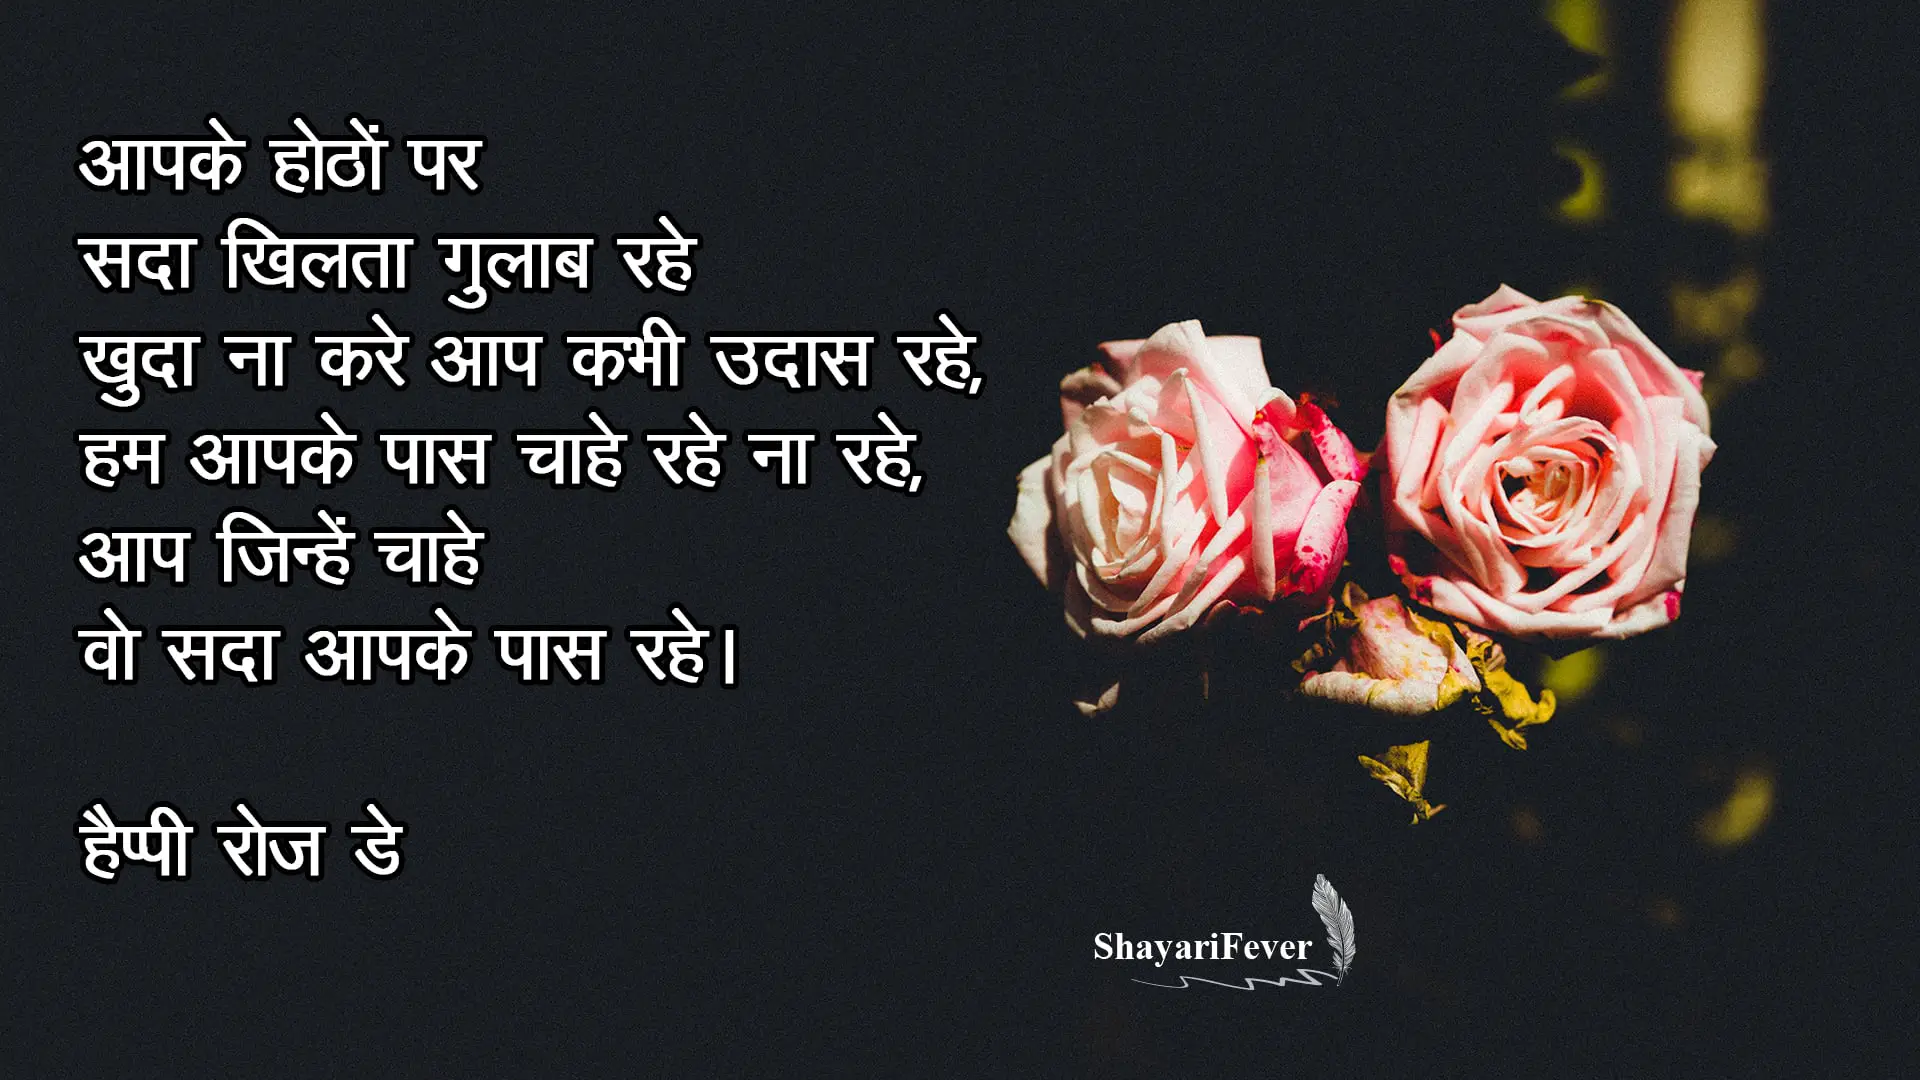 Shayari For Rose Day In Hindi